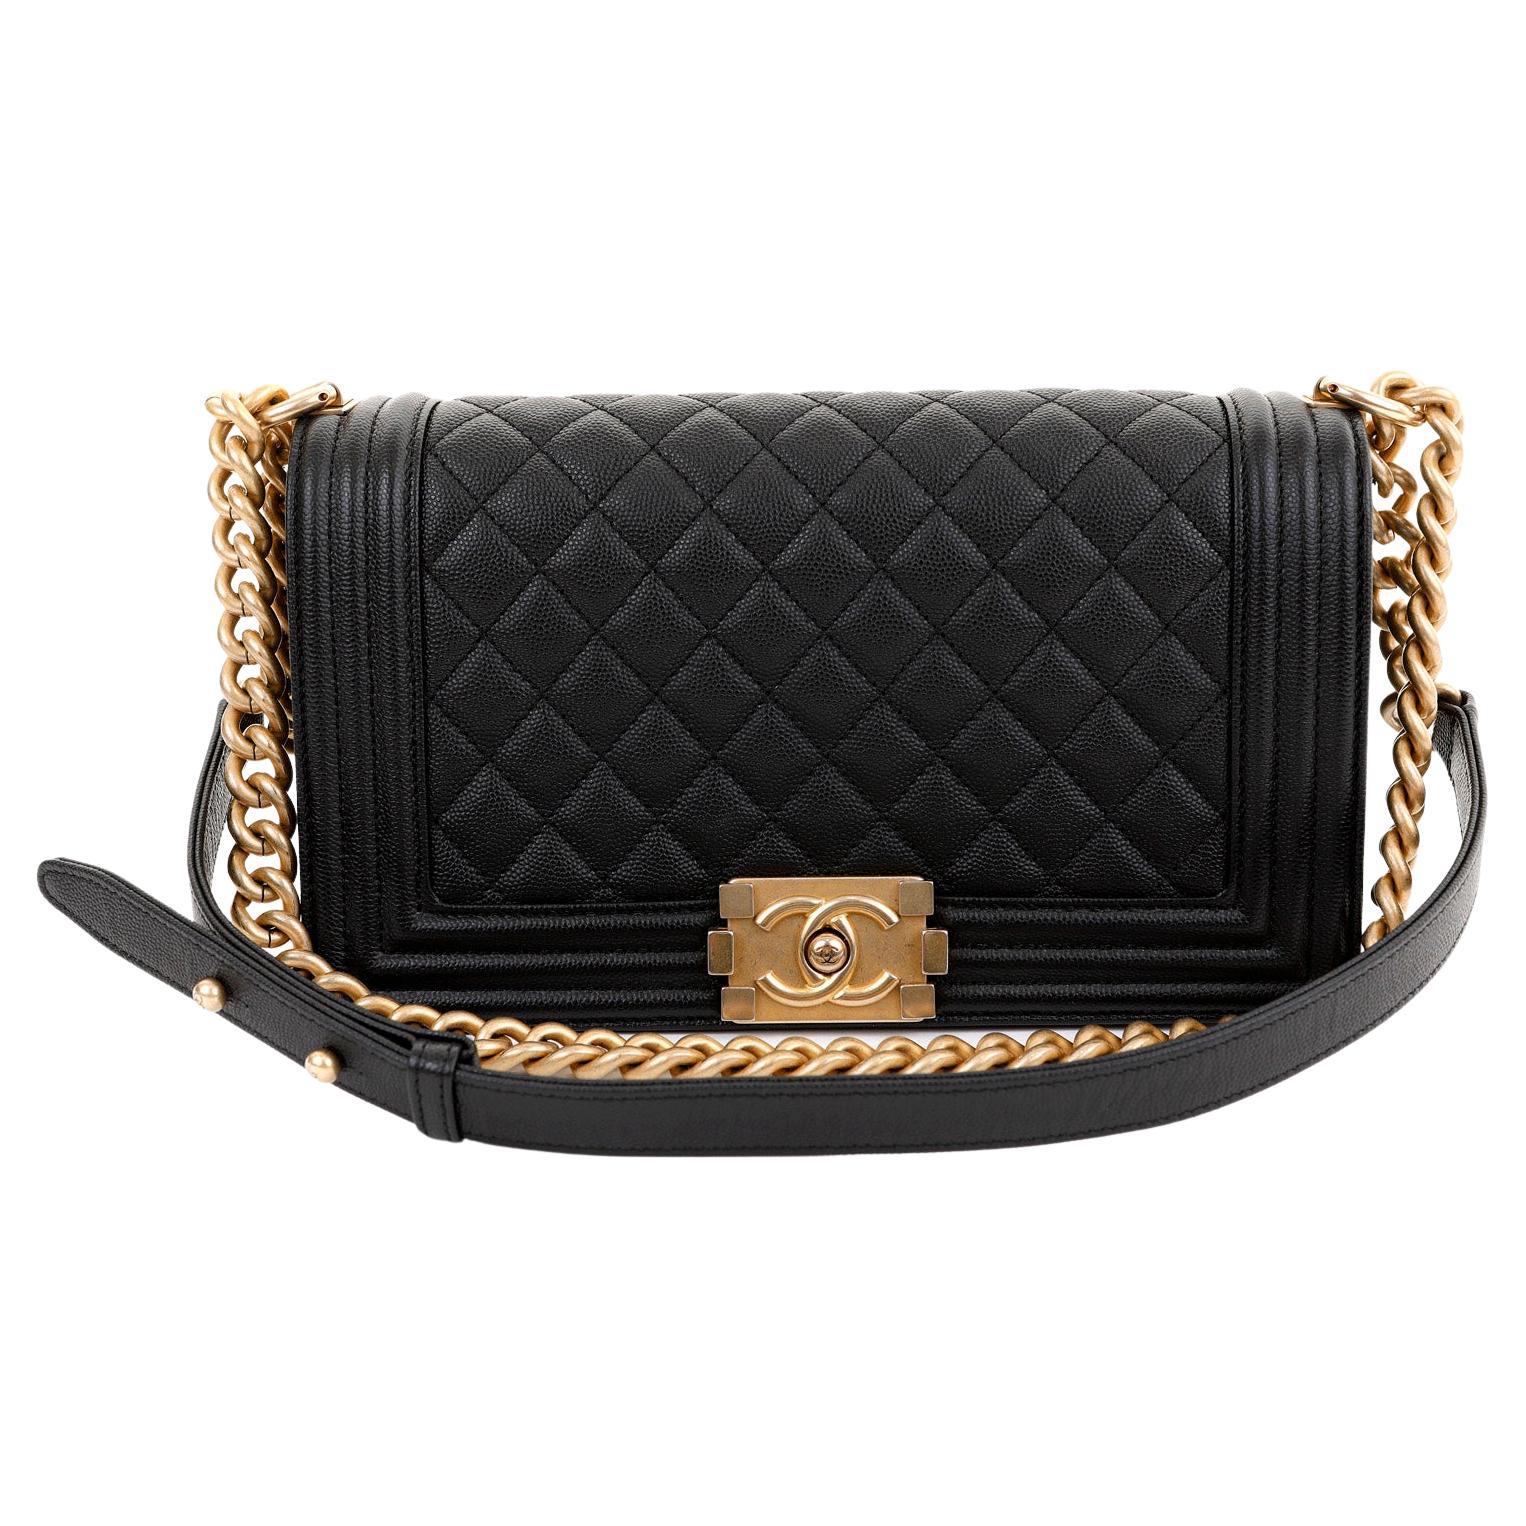  Chanel Black Caviar Medium Boy Bag 